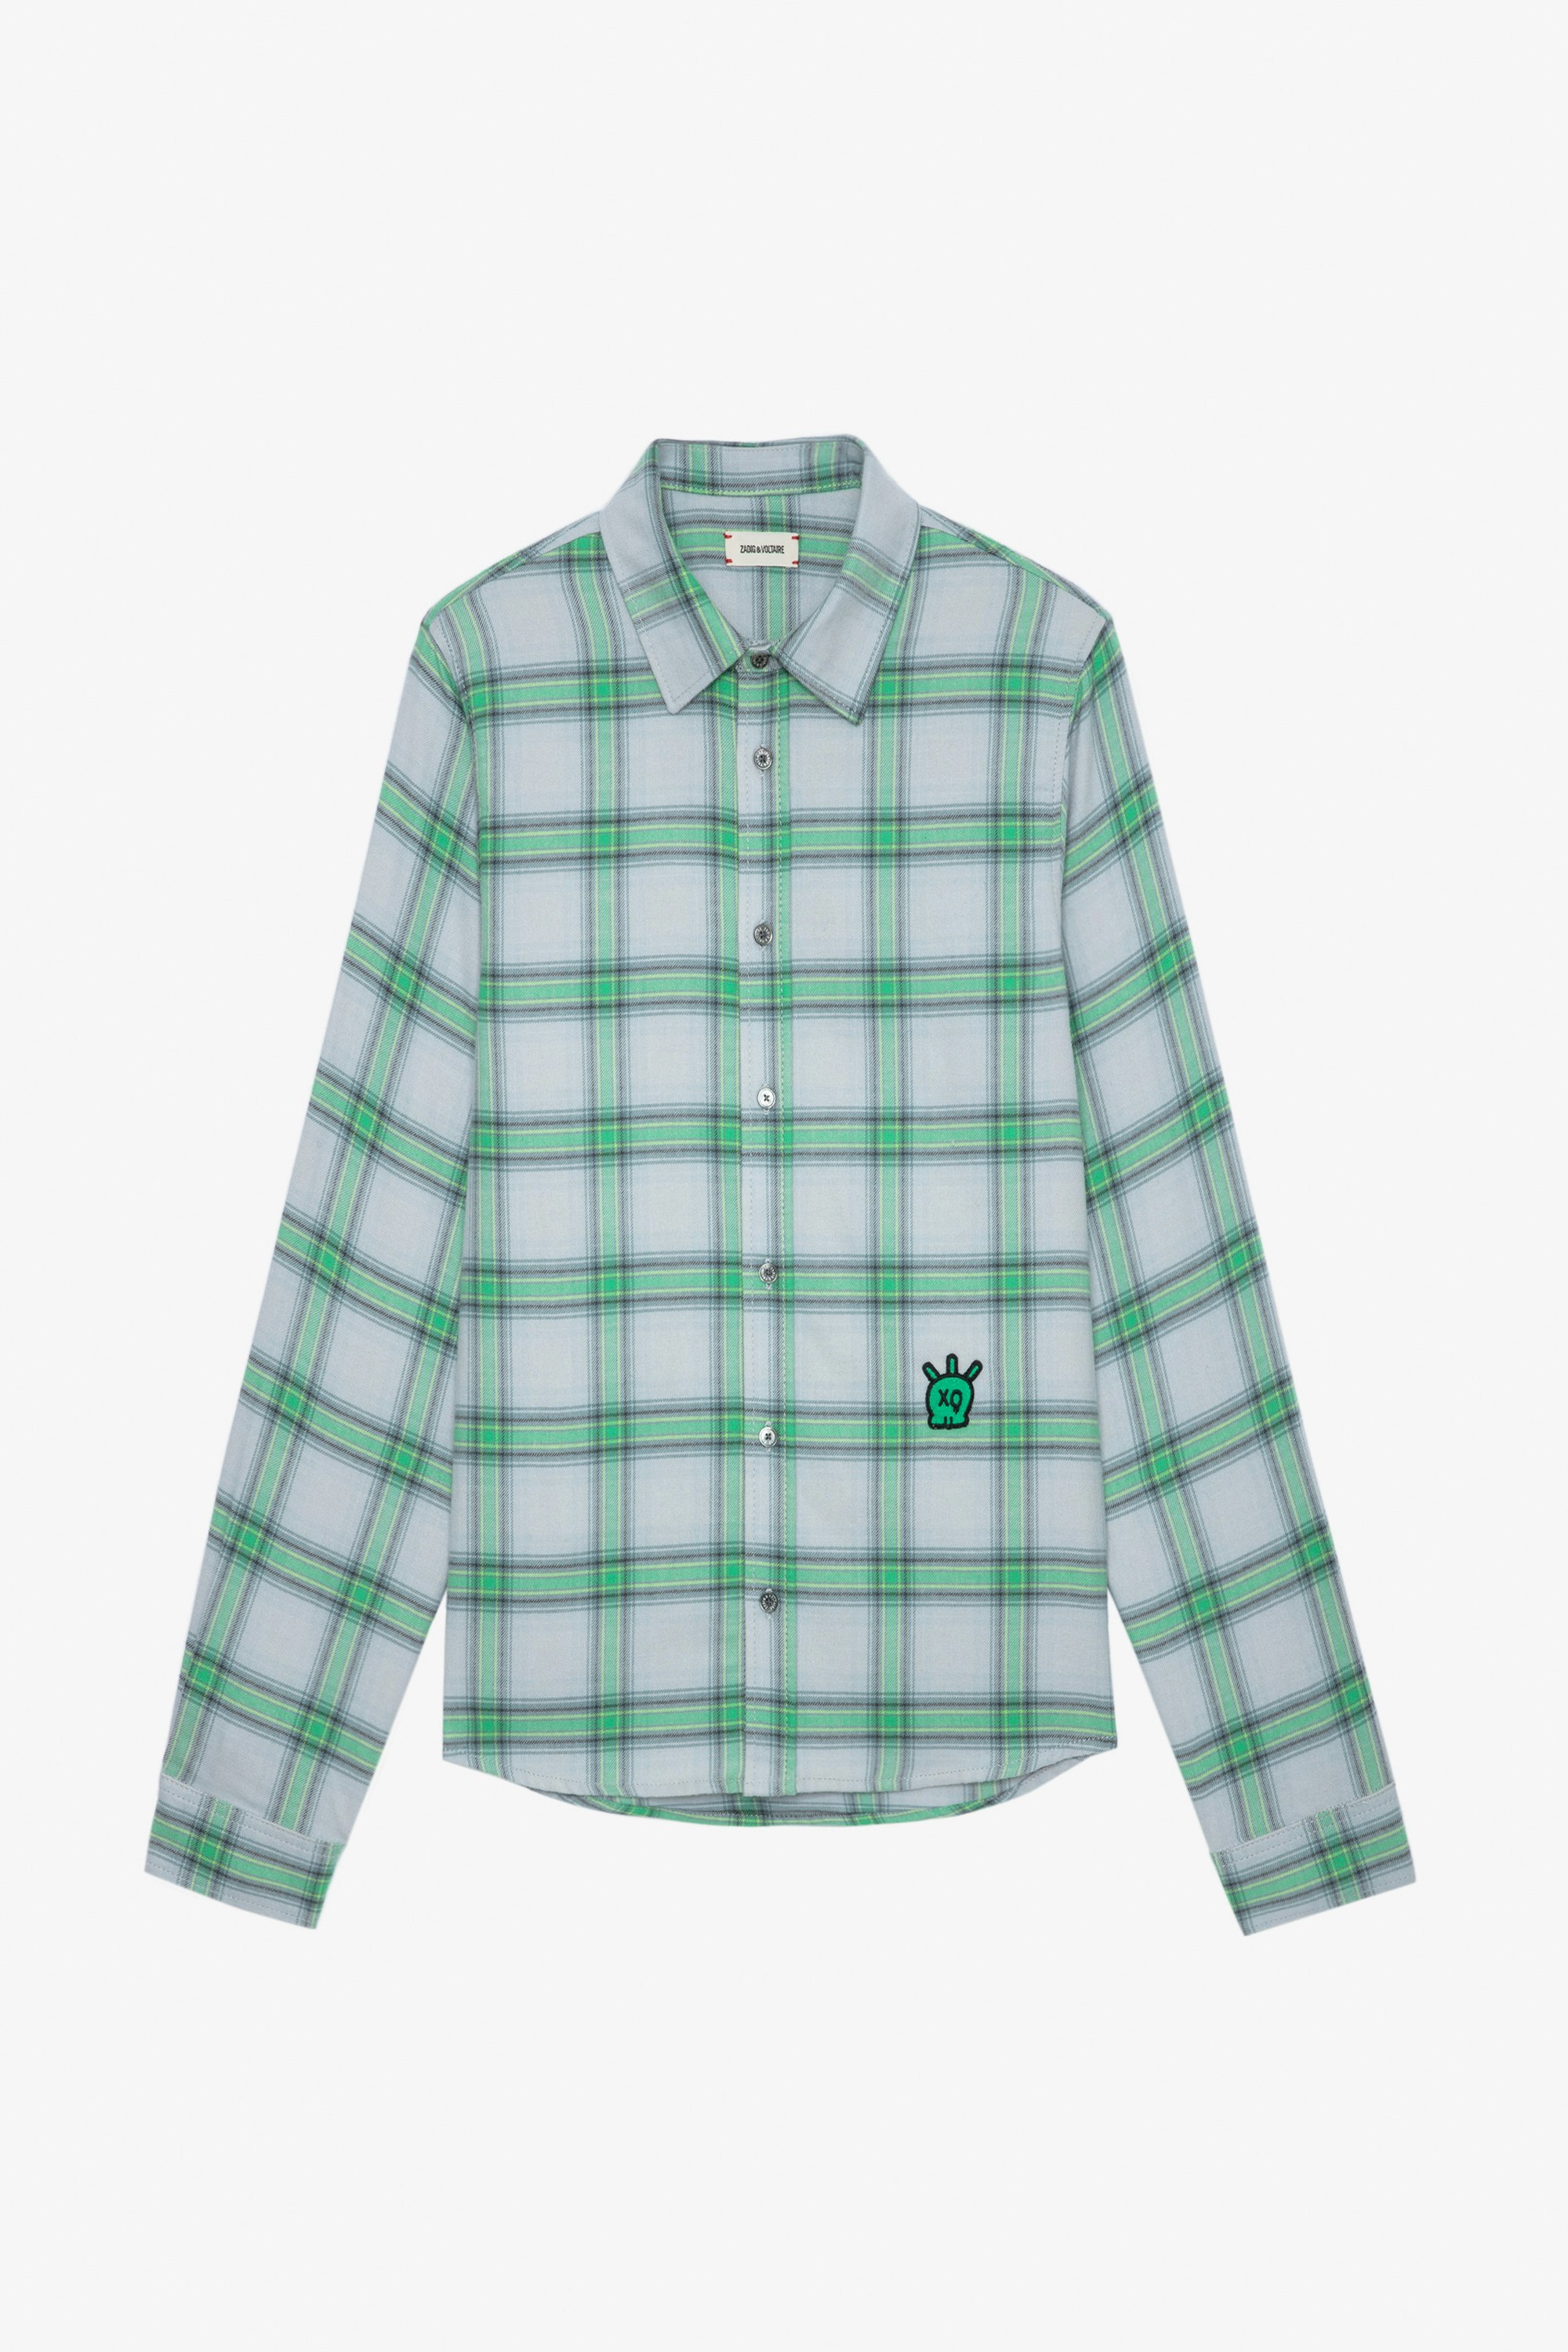 Stan Skull Shirt - Men’s checked green cotton shirt featuring a Skull XO patch.